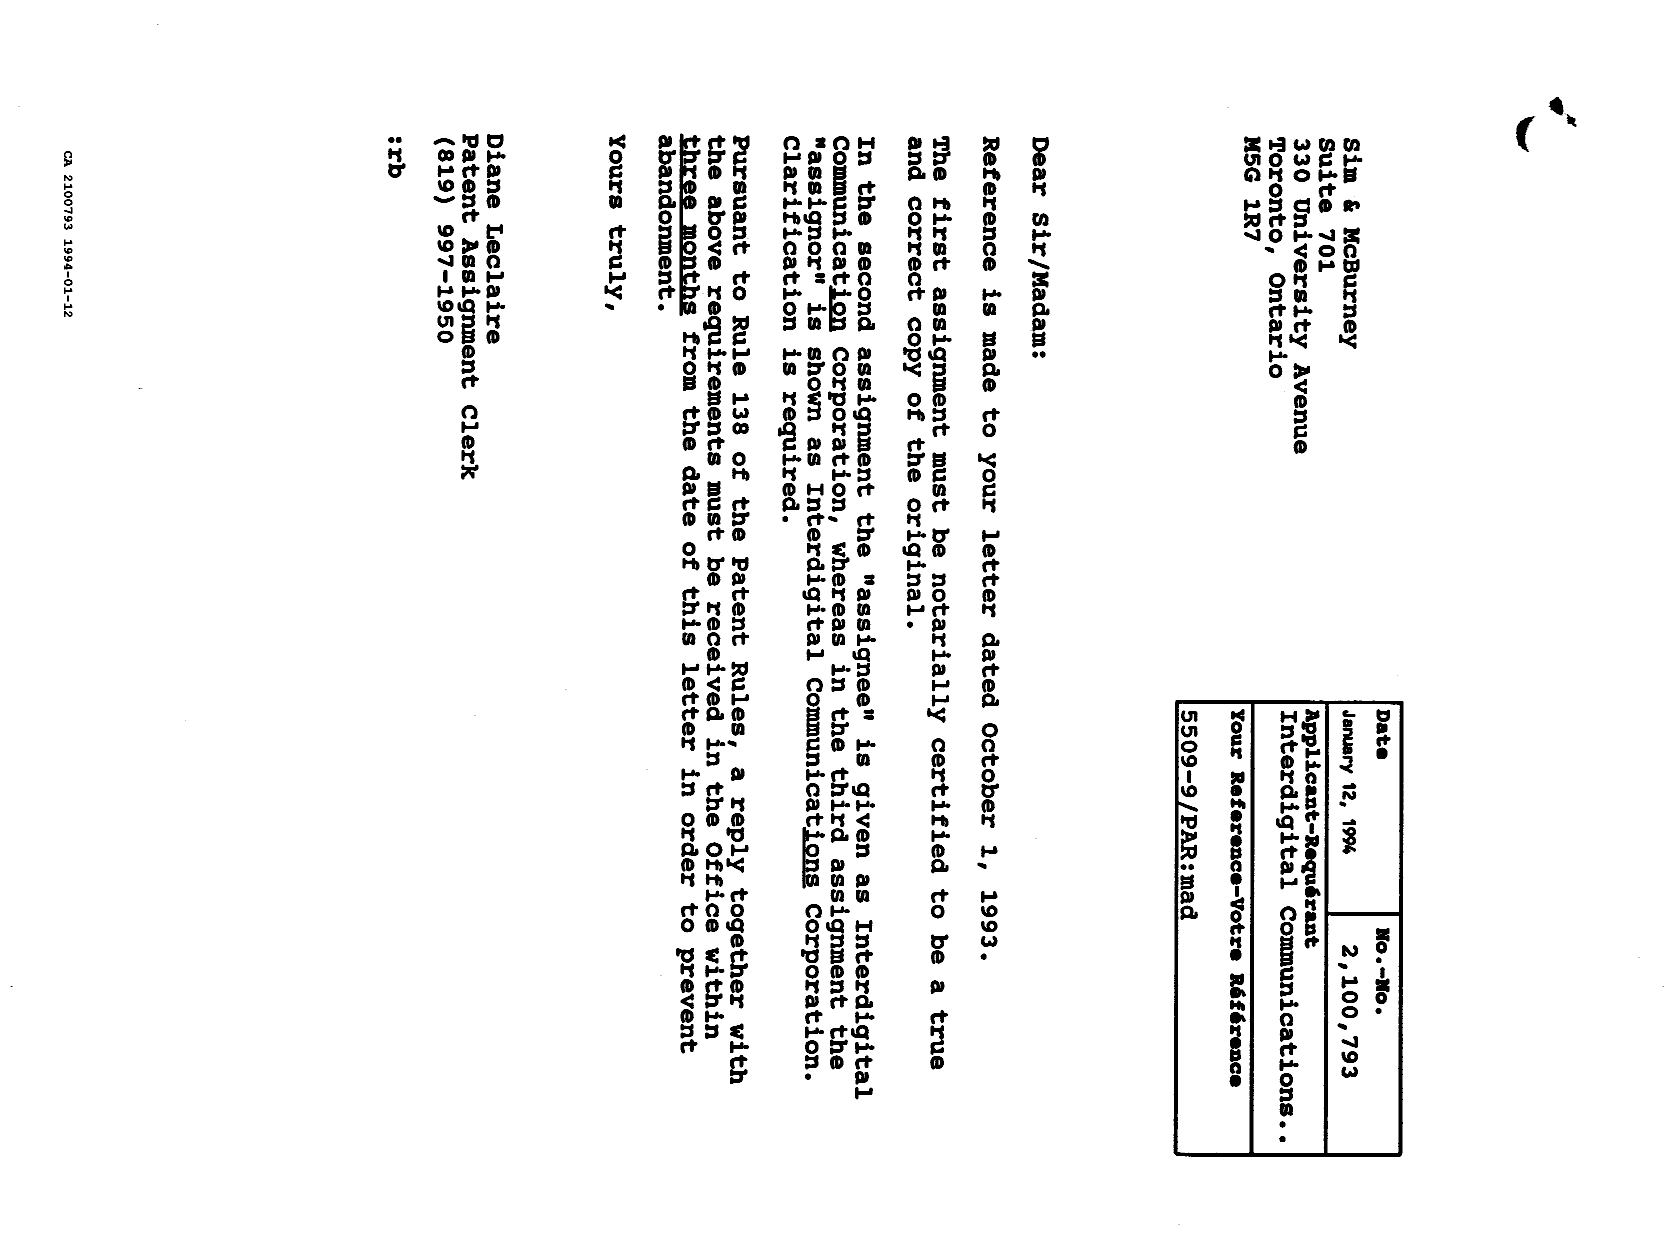 Canadian Patent Document 2100793. Correspondence 19931212. Image 1 of 1